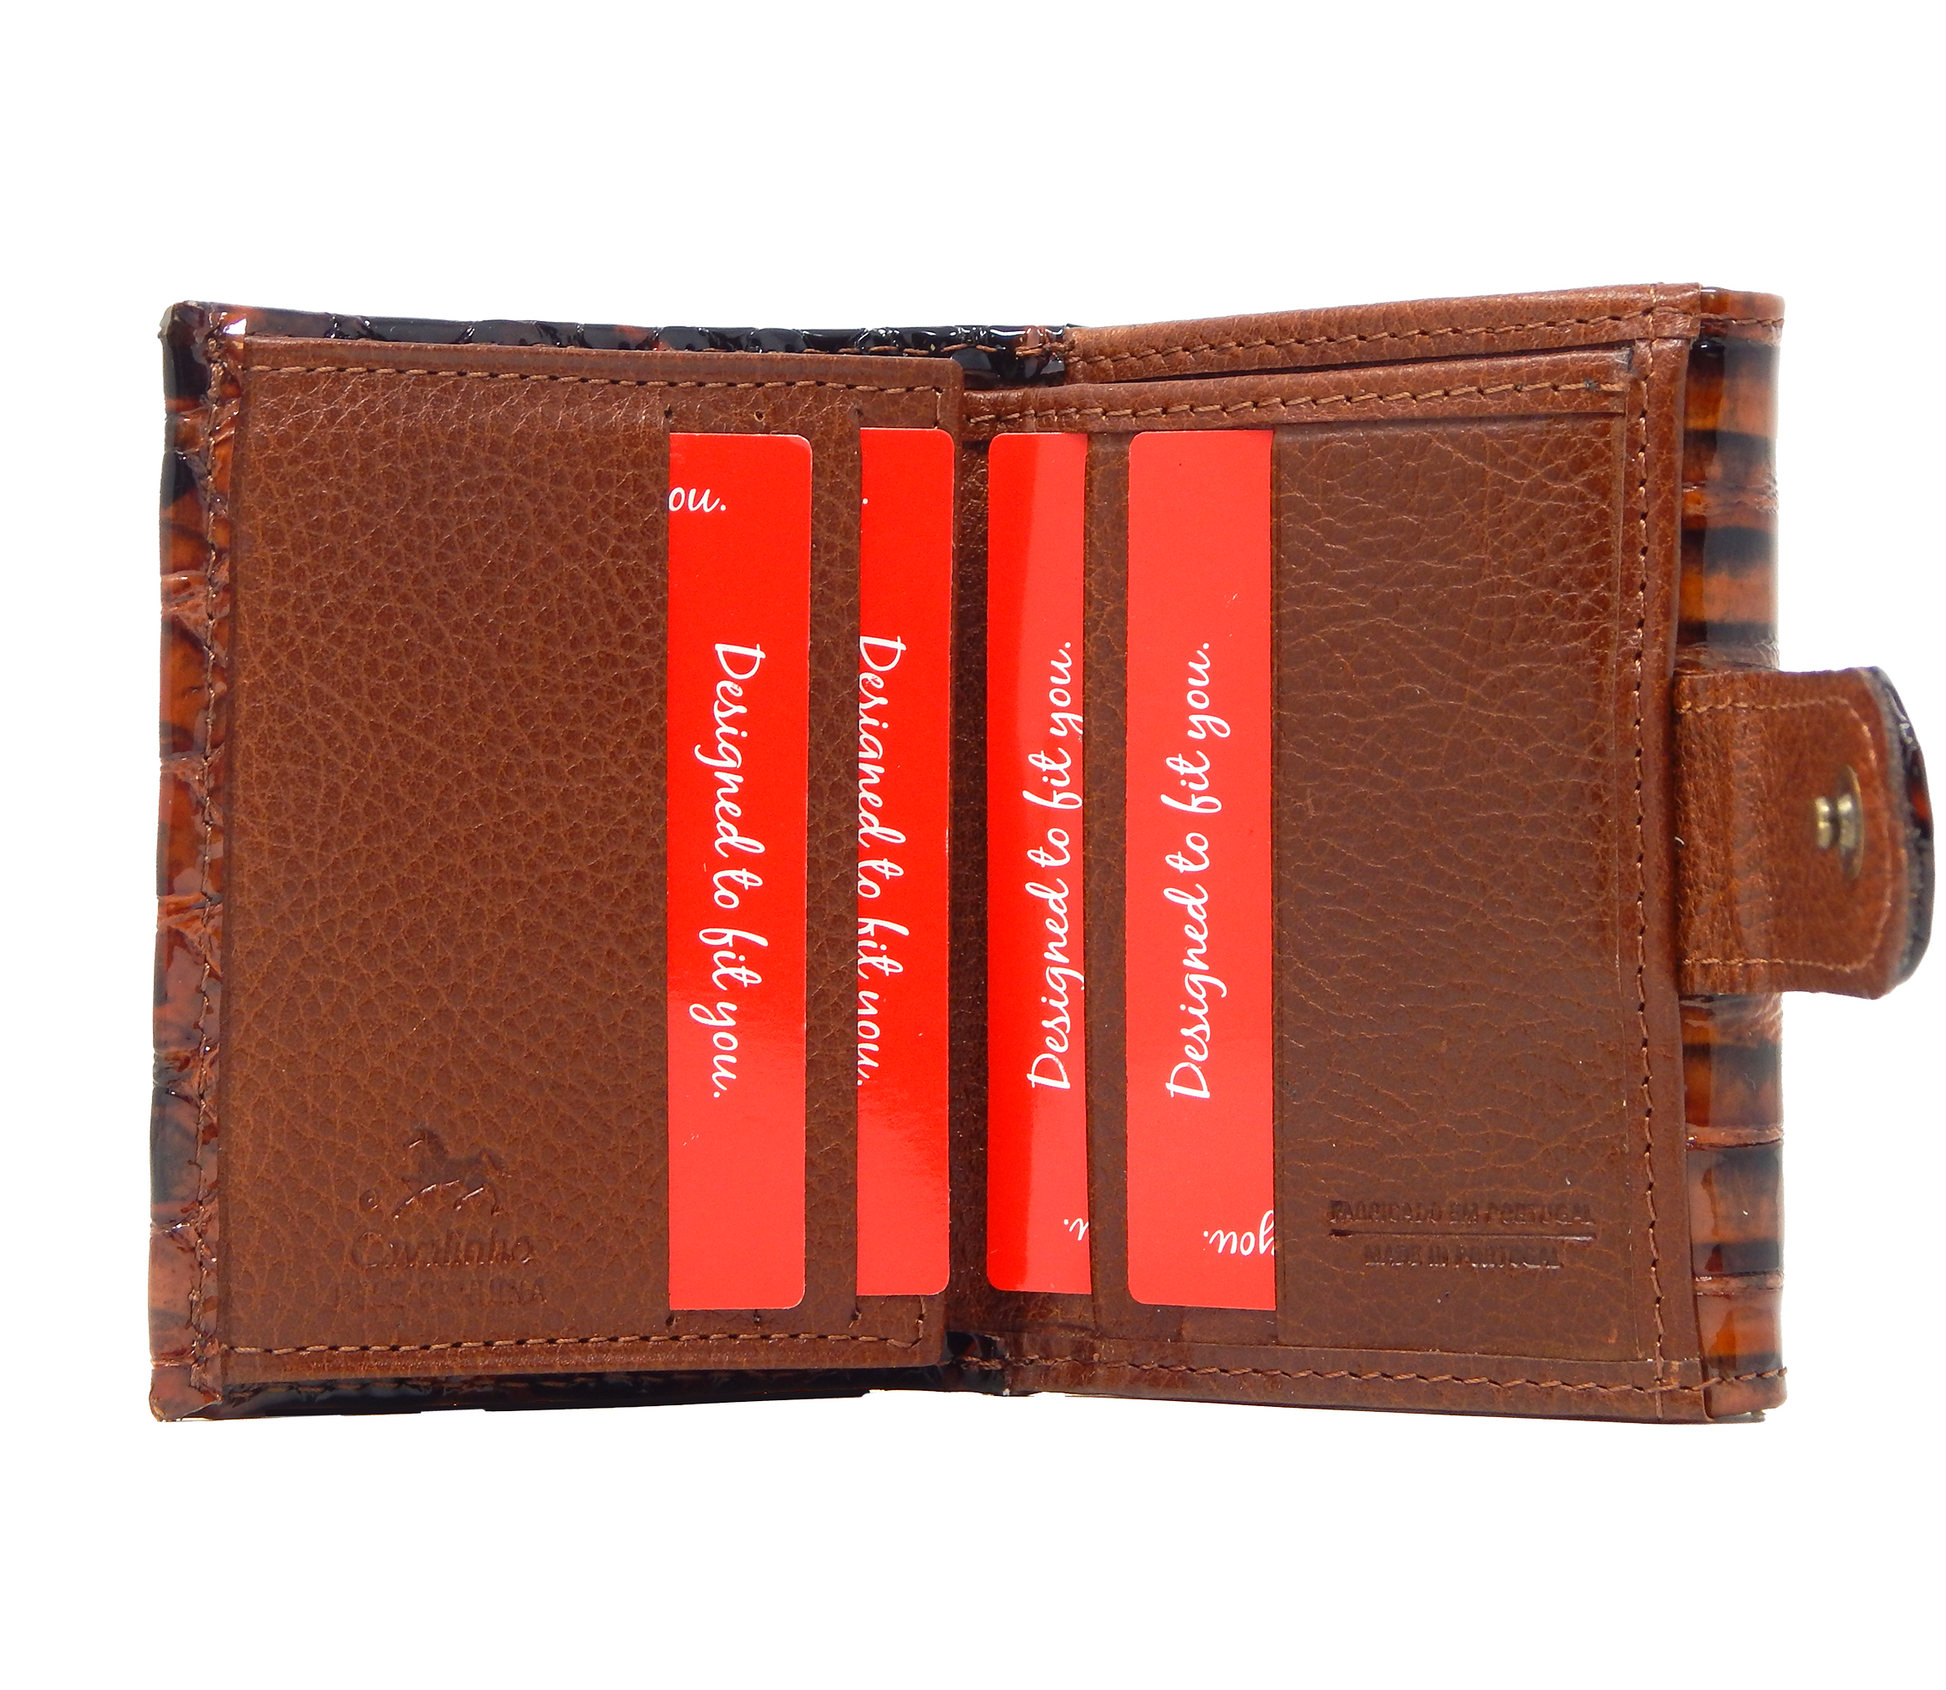 Cavalinho Gallop Mini Patent Leather Wallet - SaddleBrown - 28170530.13_4